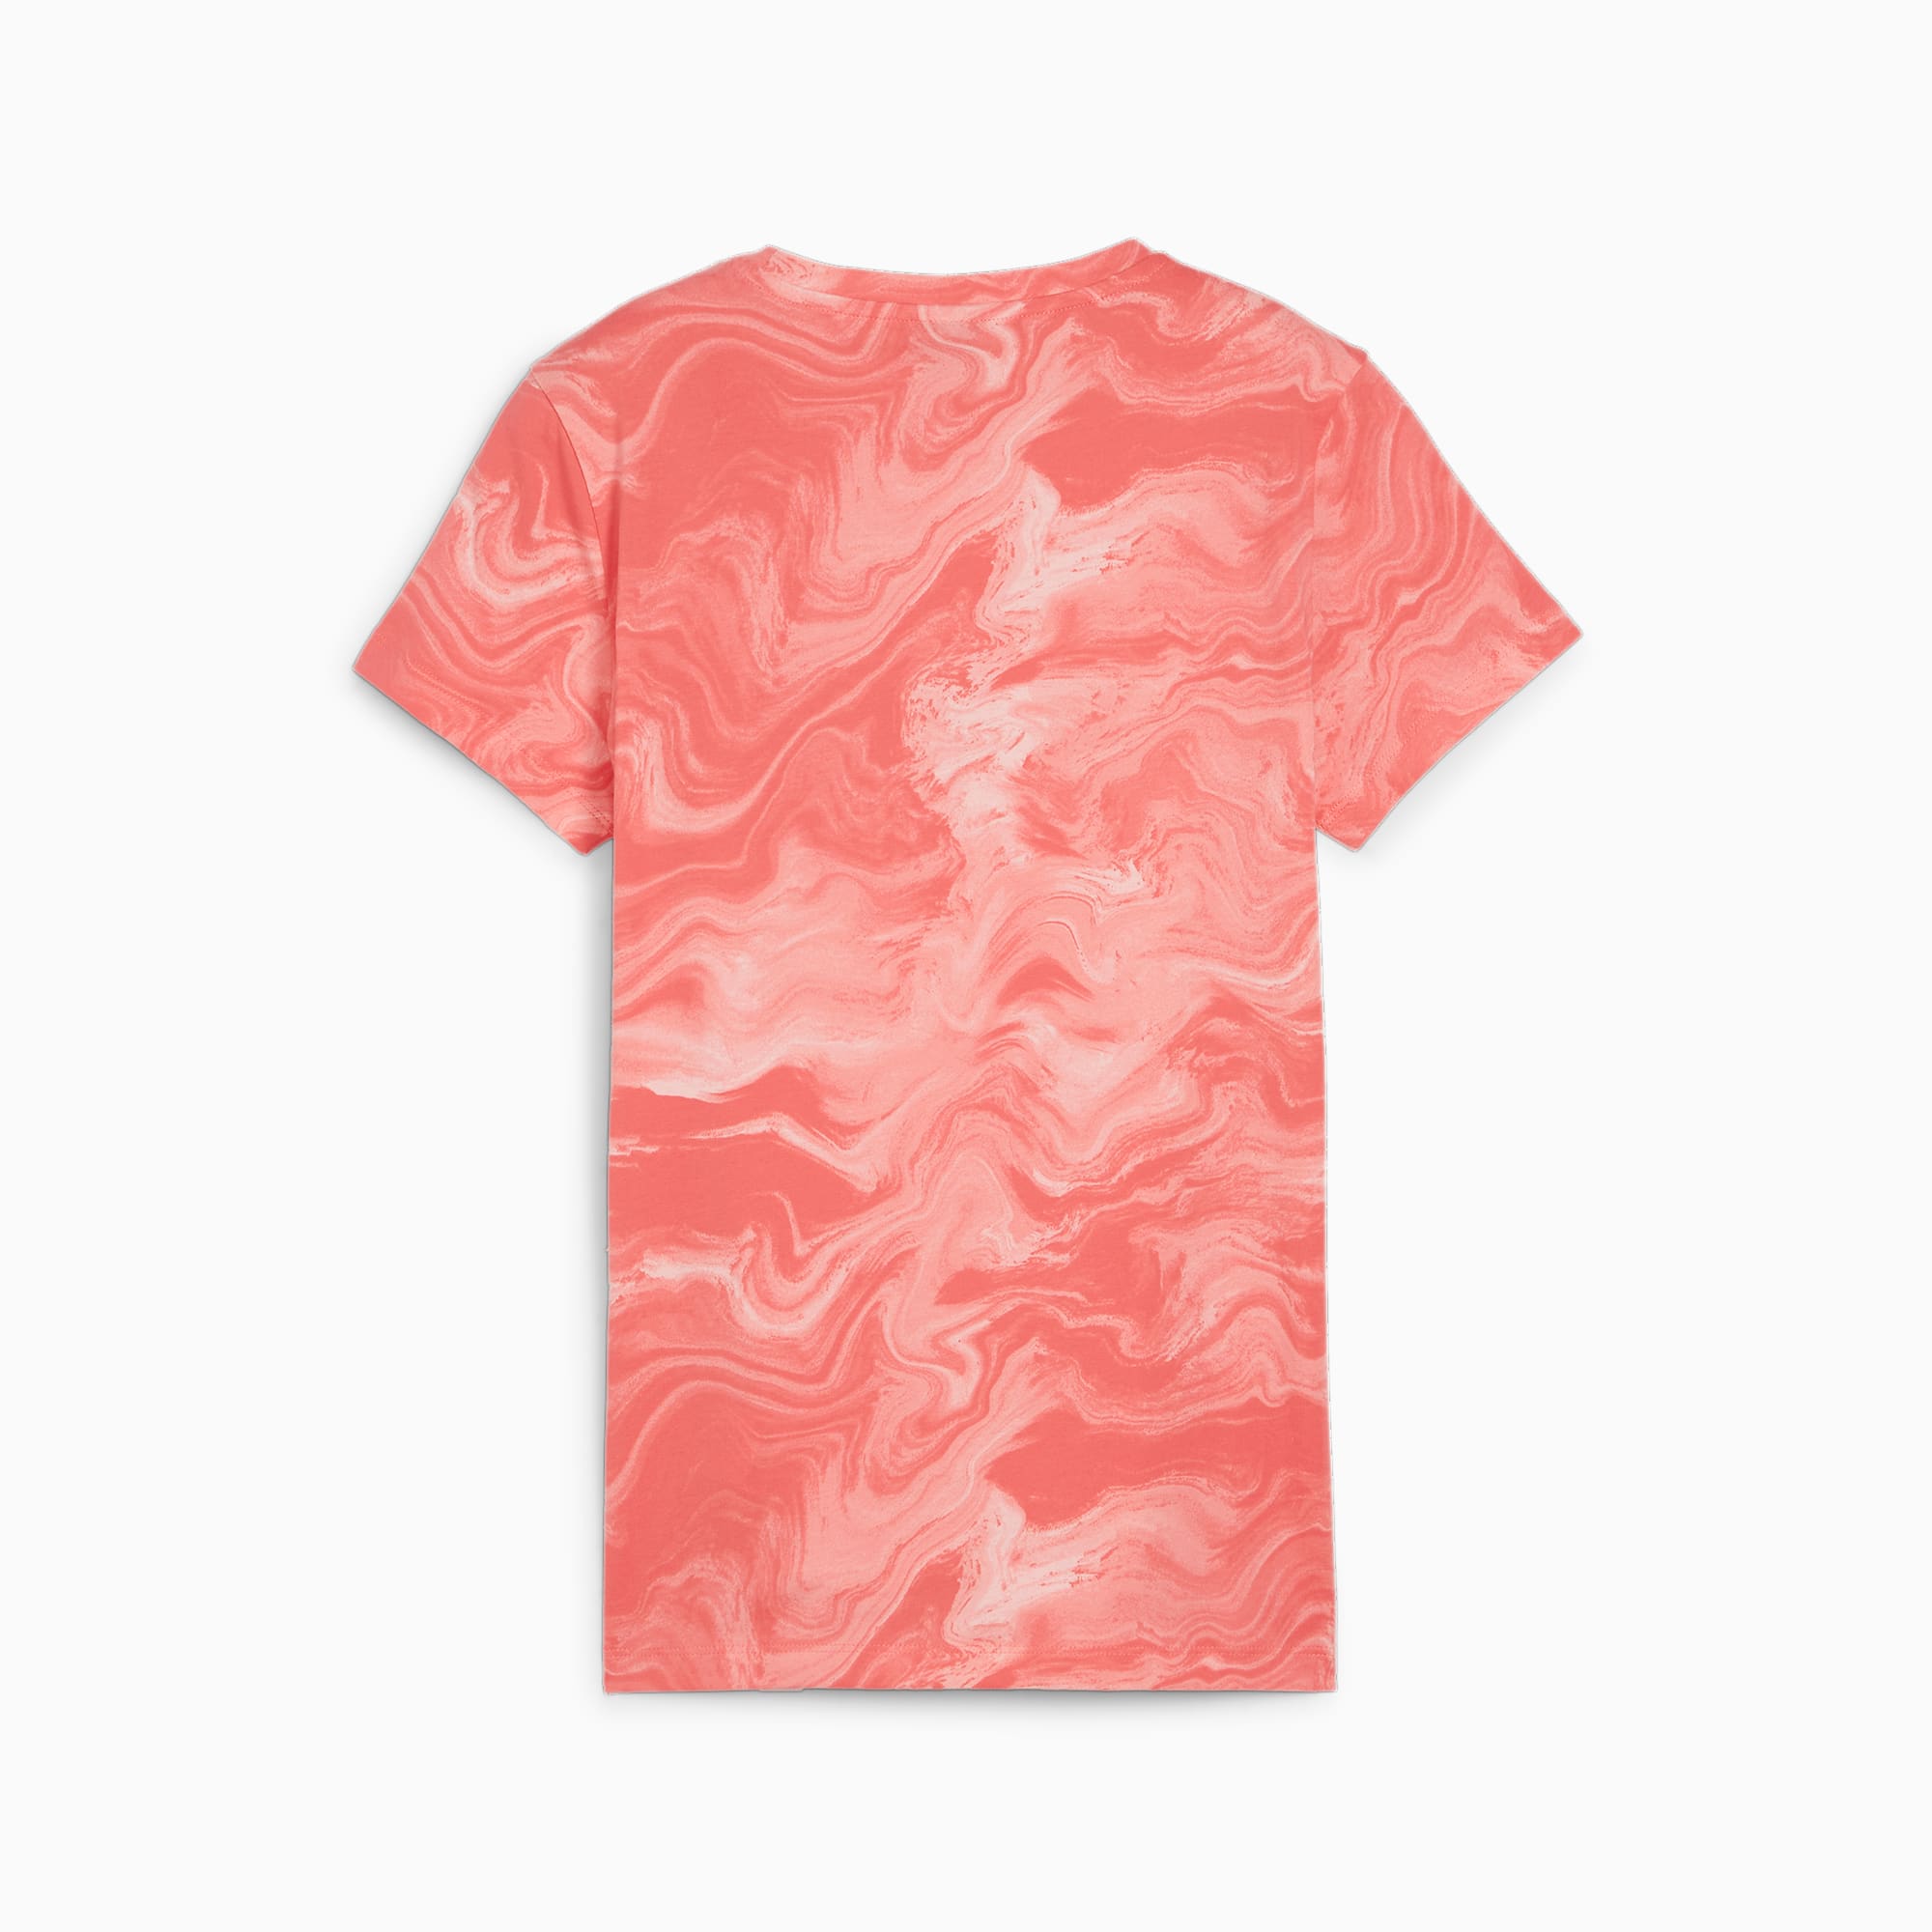 PUMA Ess+ Marbleized Women's T-Shirt, Peach Smoothie, Size M, Clothing